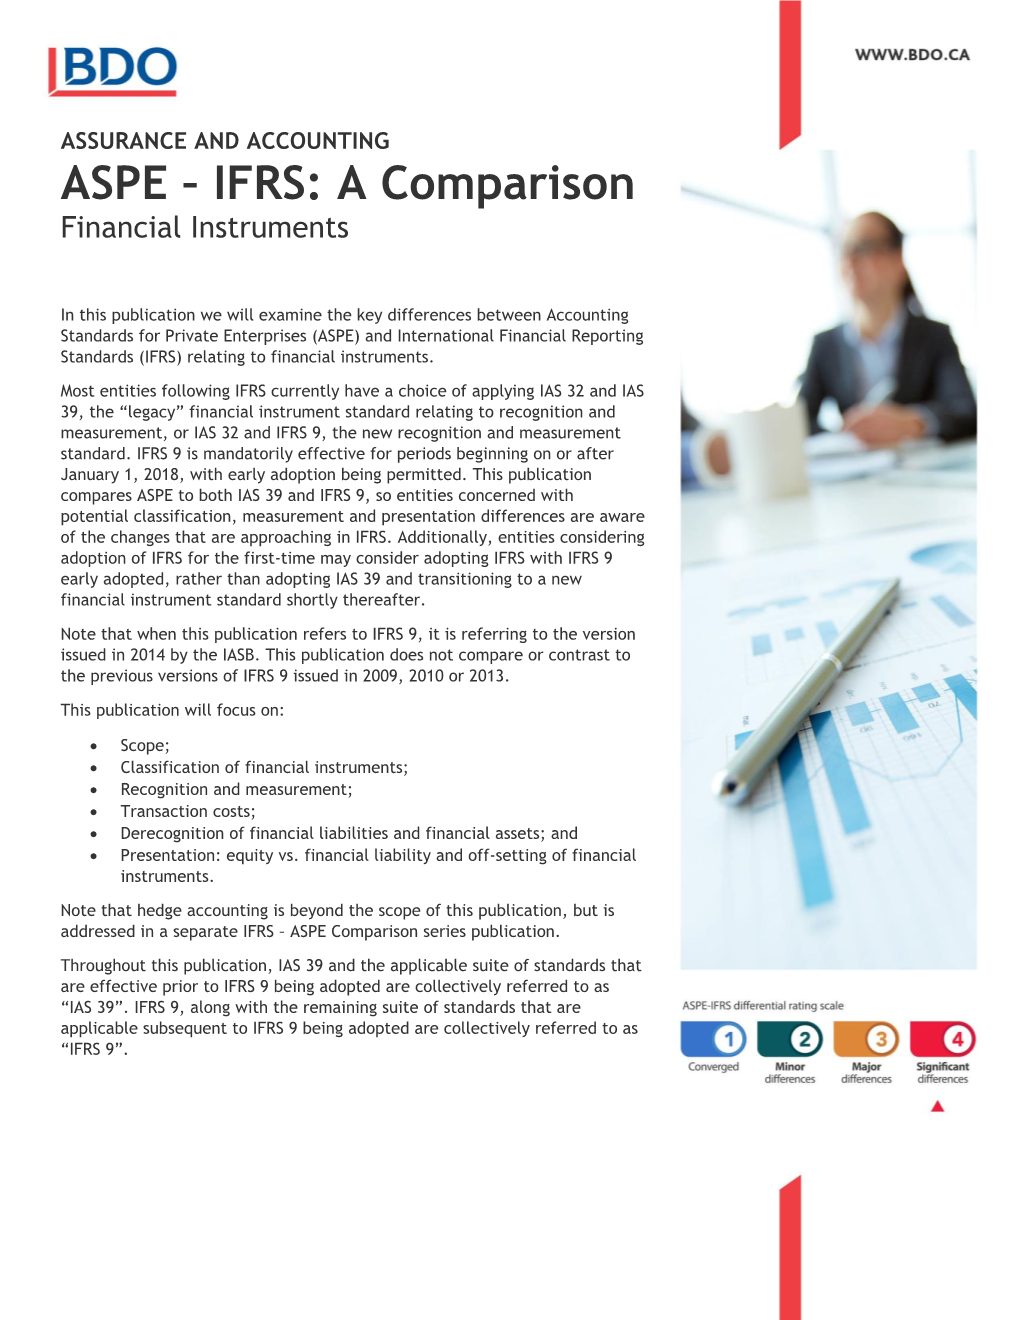 ASPE – IFRS: a Comparison Financial Instruments